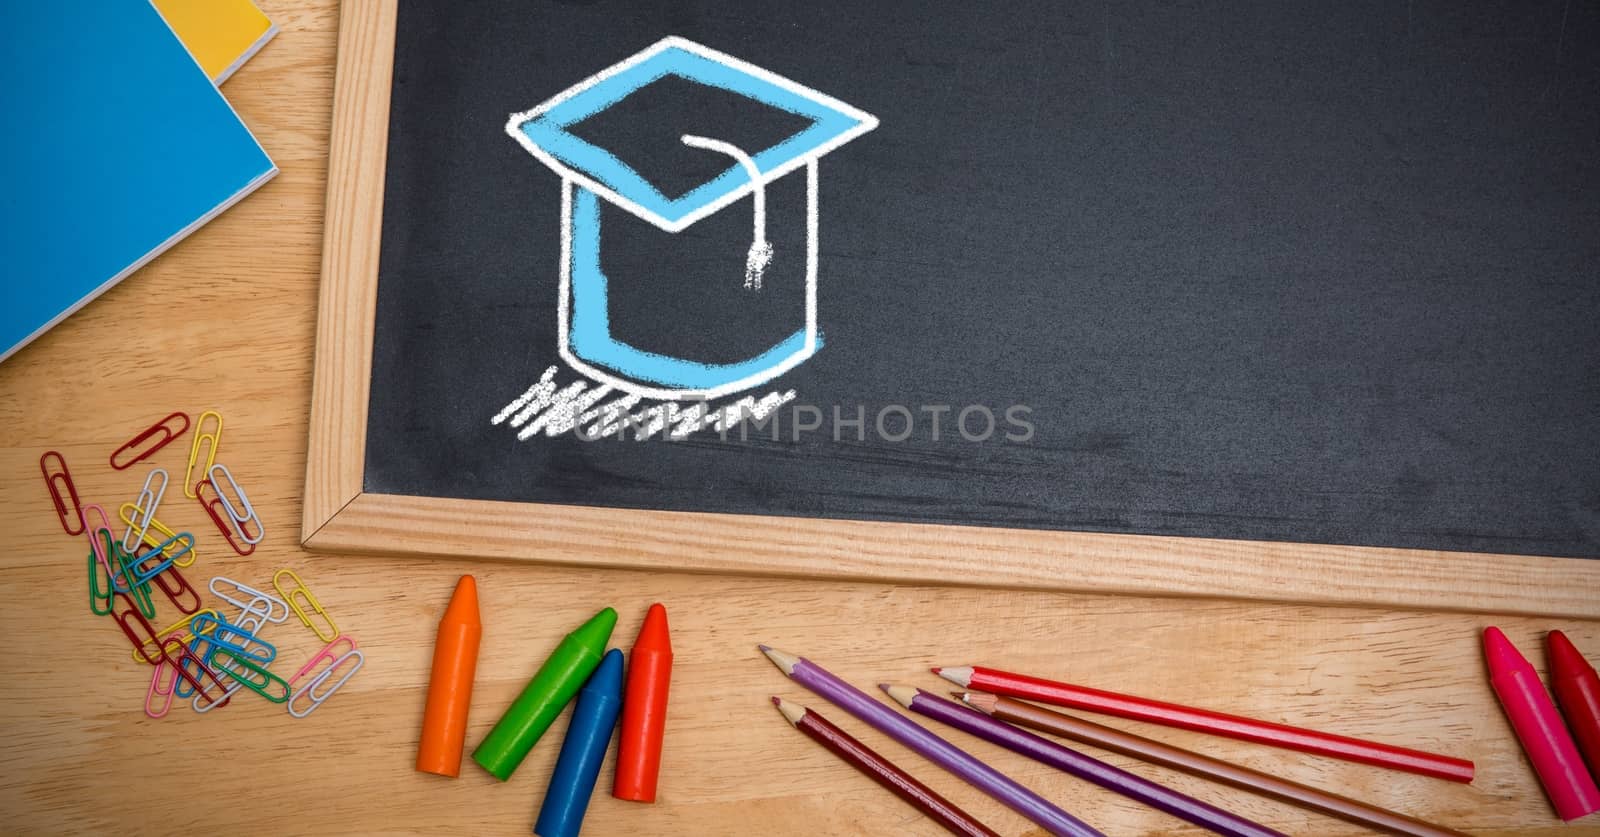 Digital composite of Graduation hat education drawings on blackboard for school